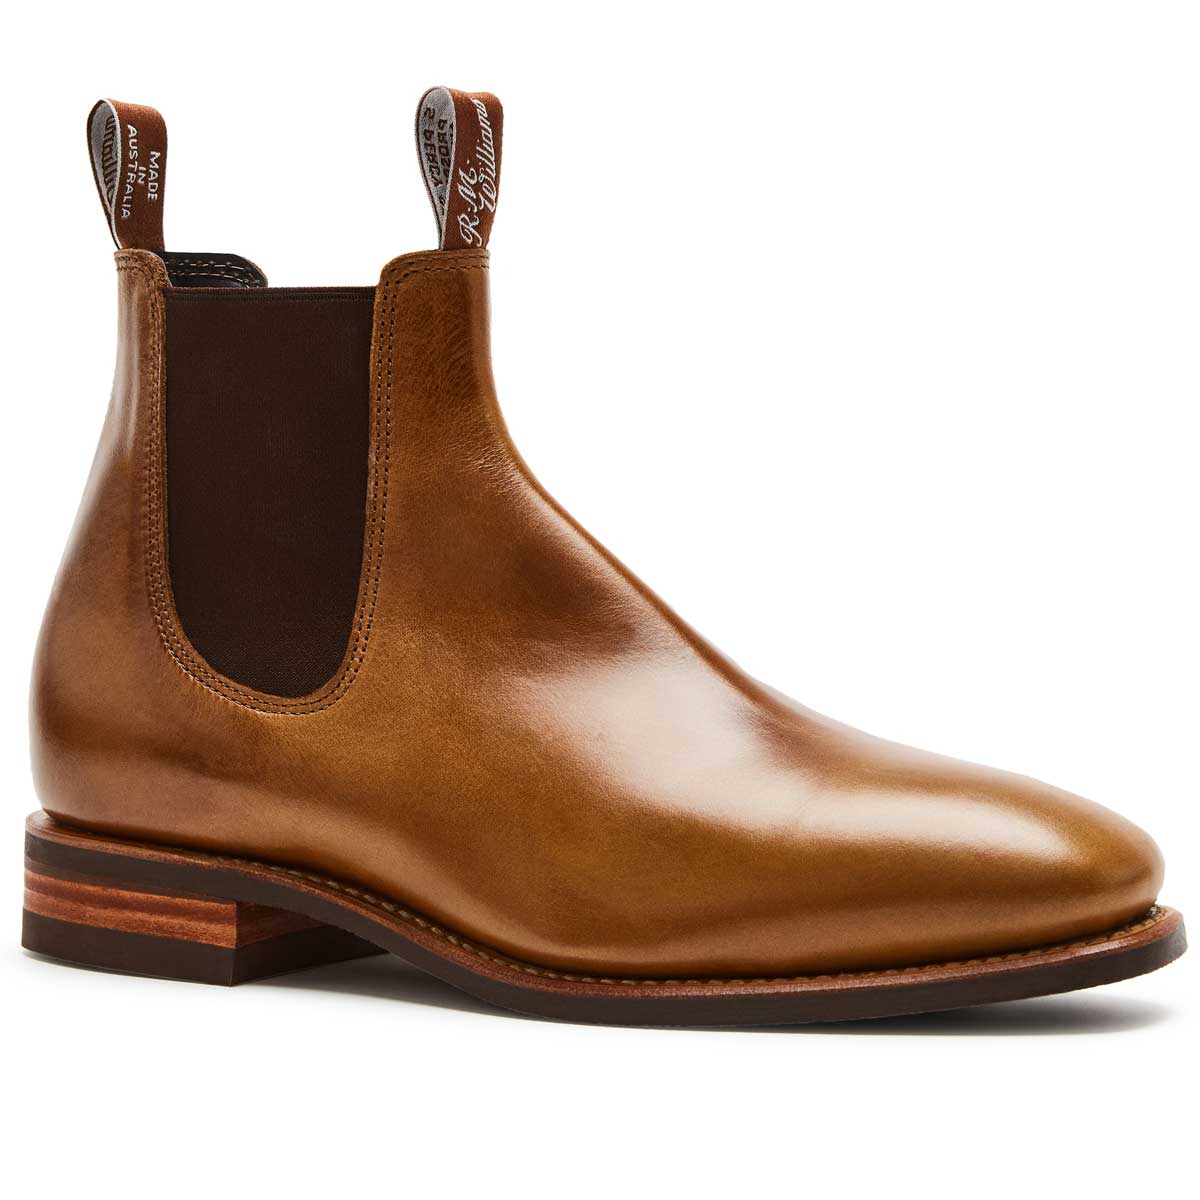 File:Black RM Williams comfort craftsman boots - top view.jpg